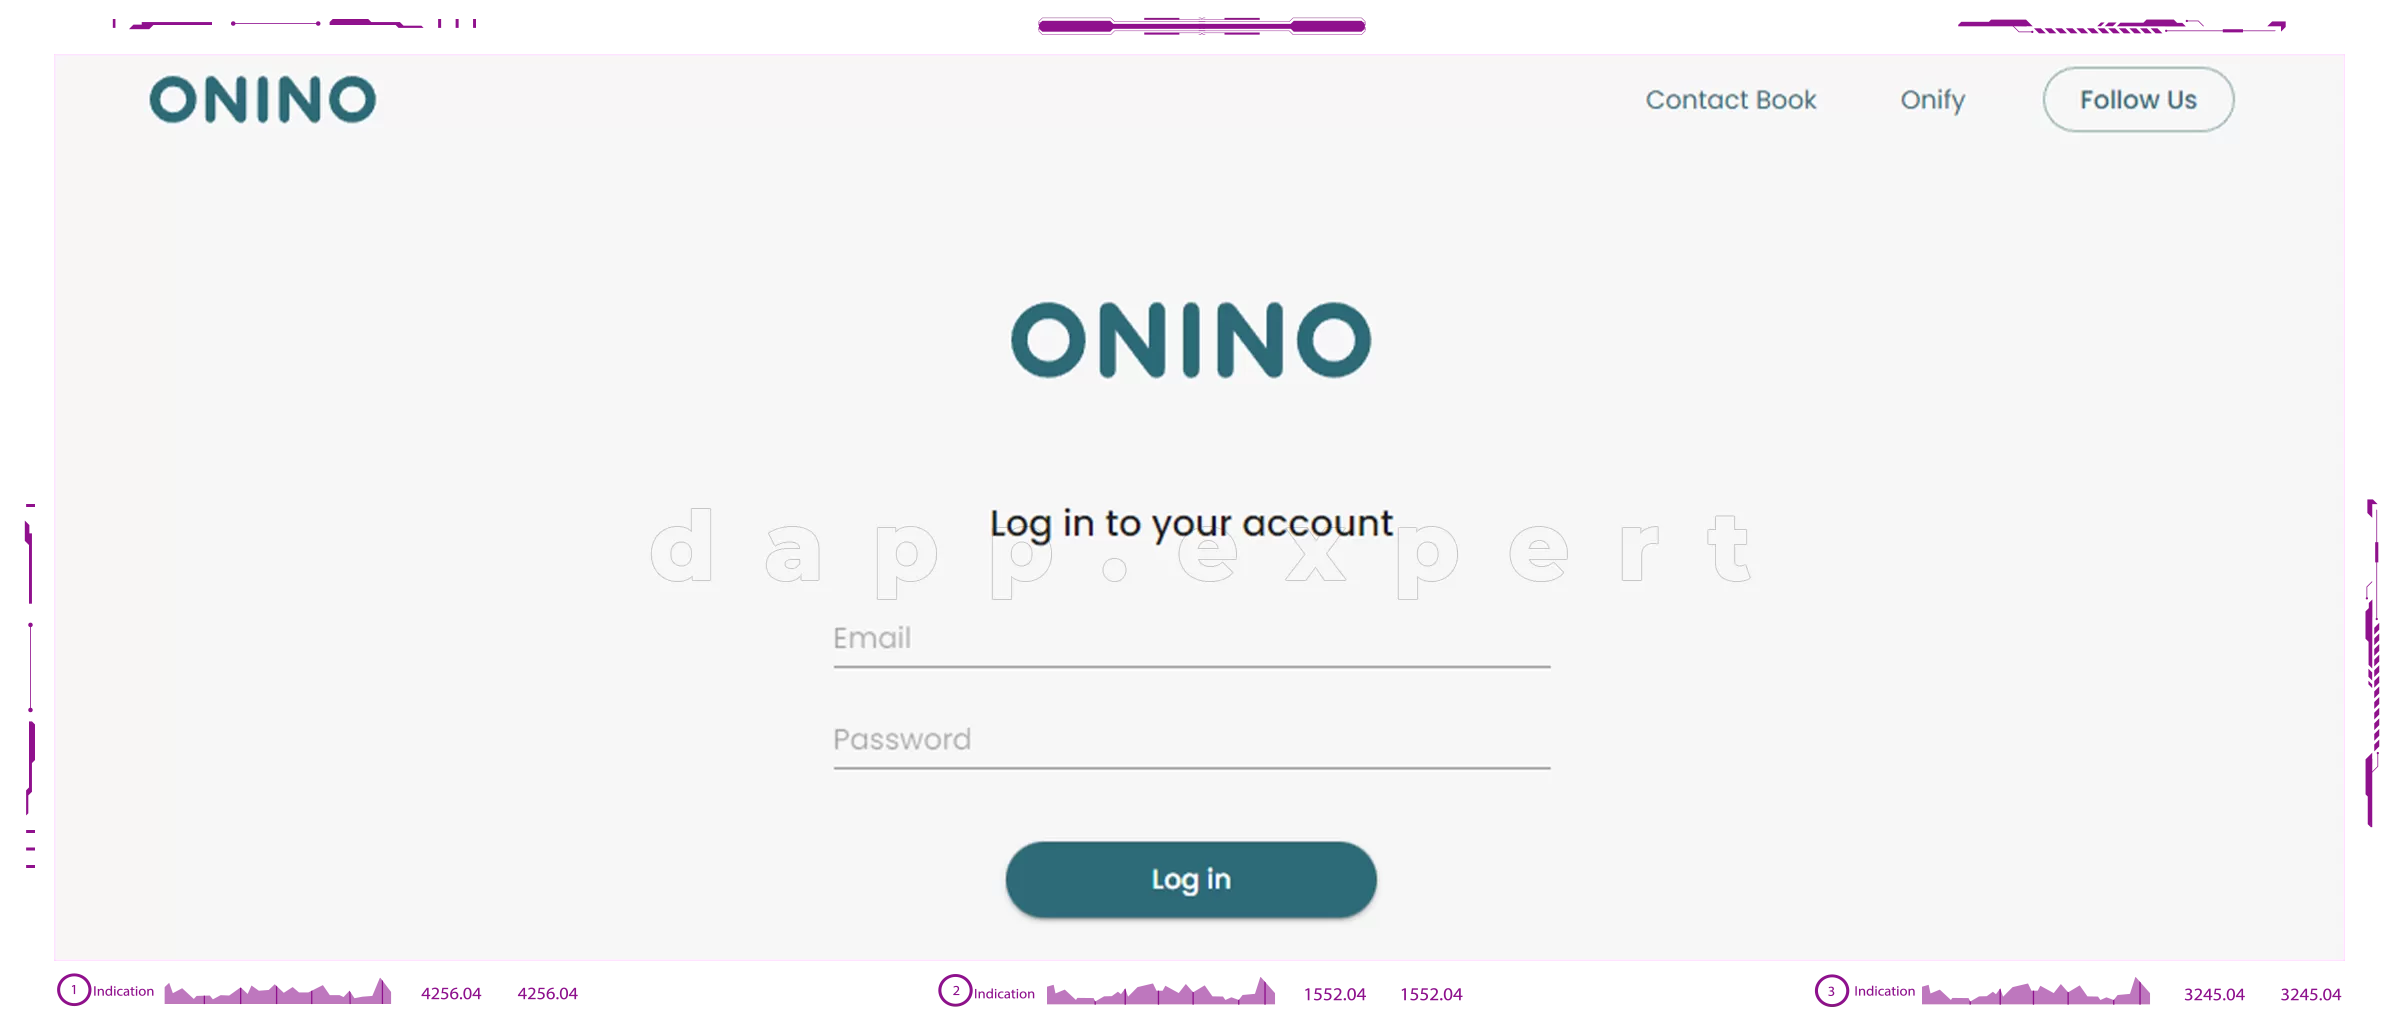 ONINO Contact Book dapps